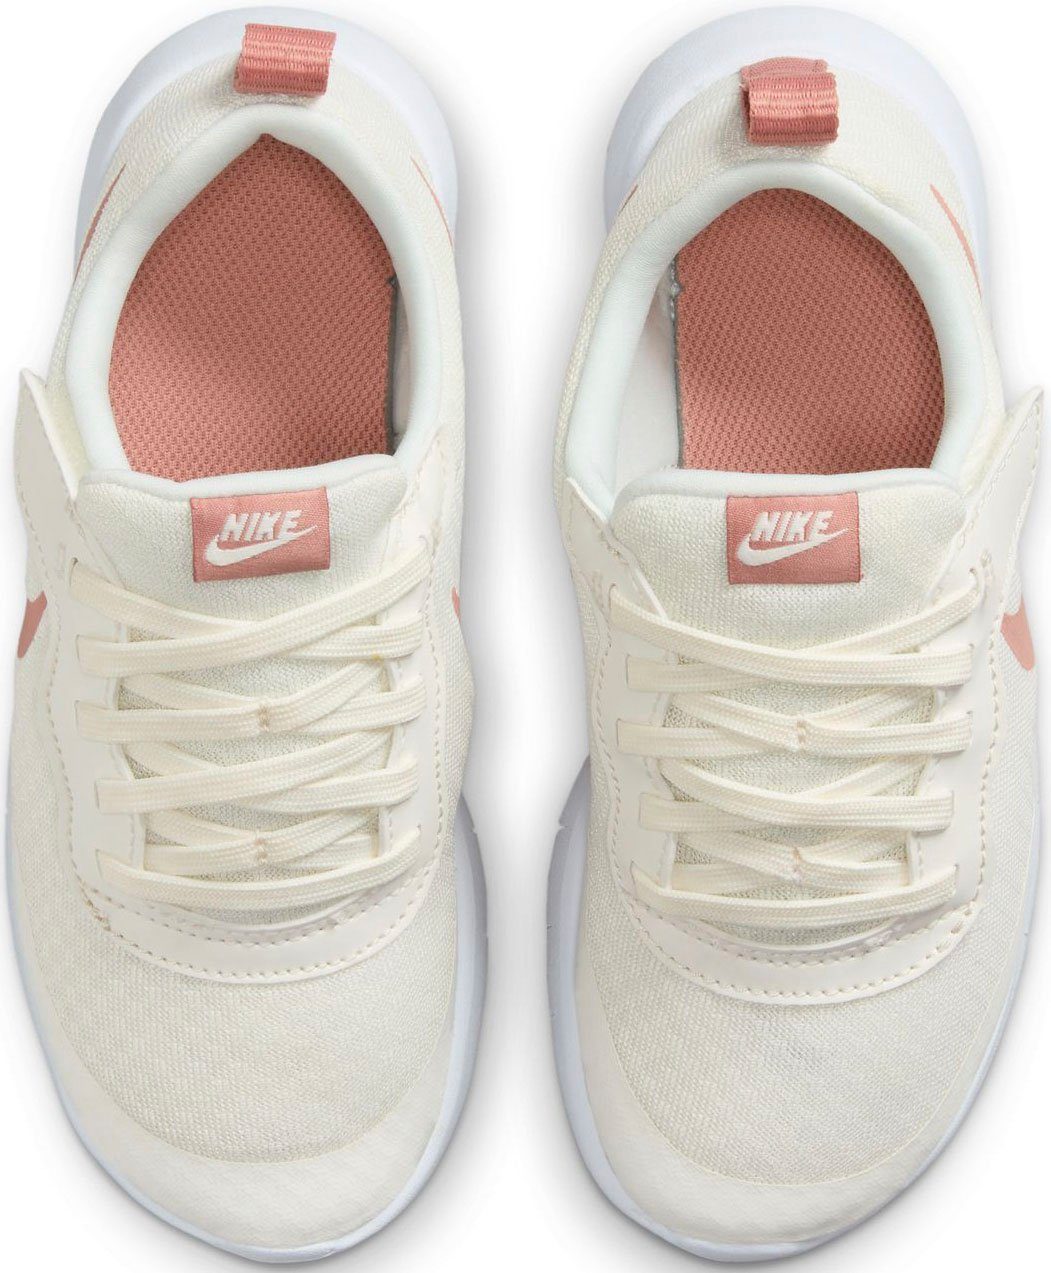 Sportswear (PS) Tanjun Nike Sneaker EZ summit white